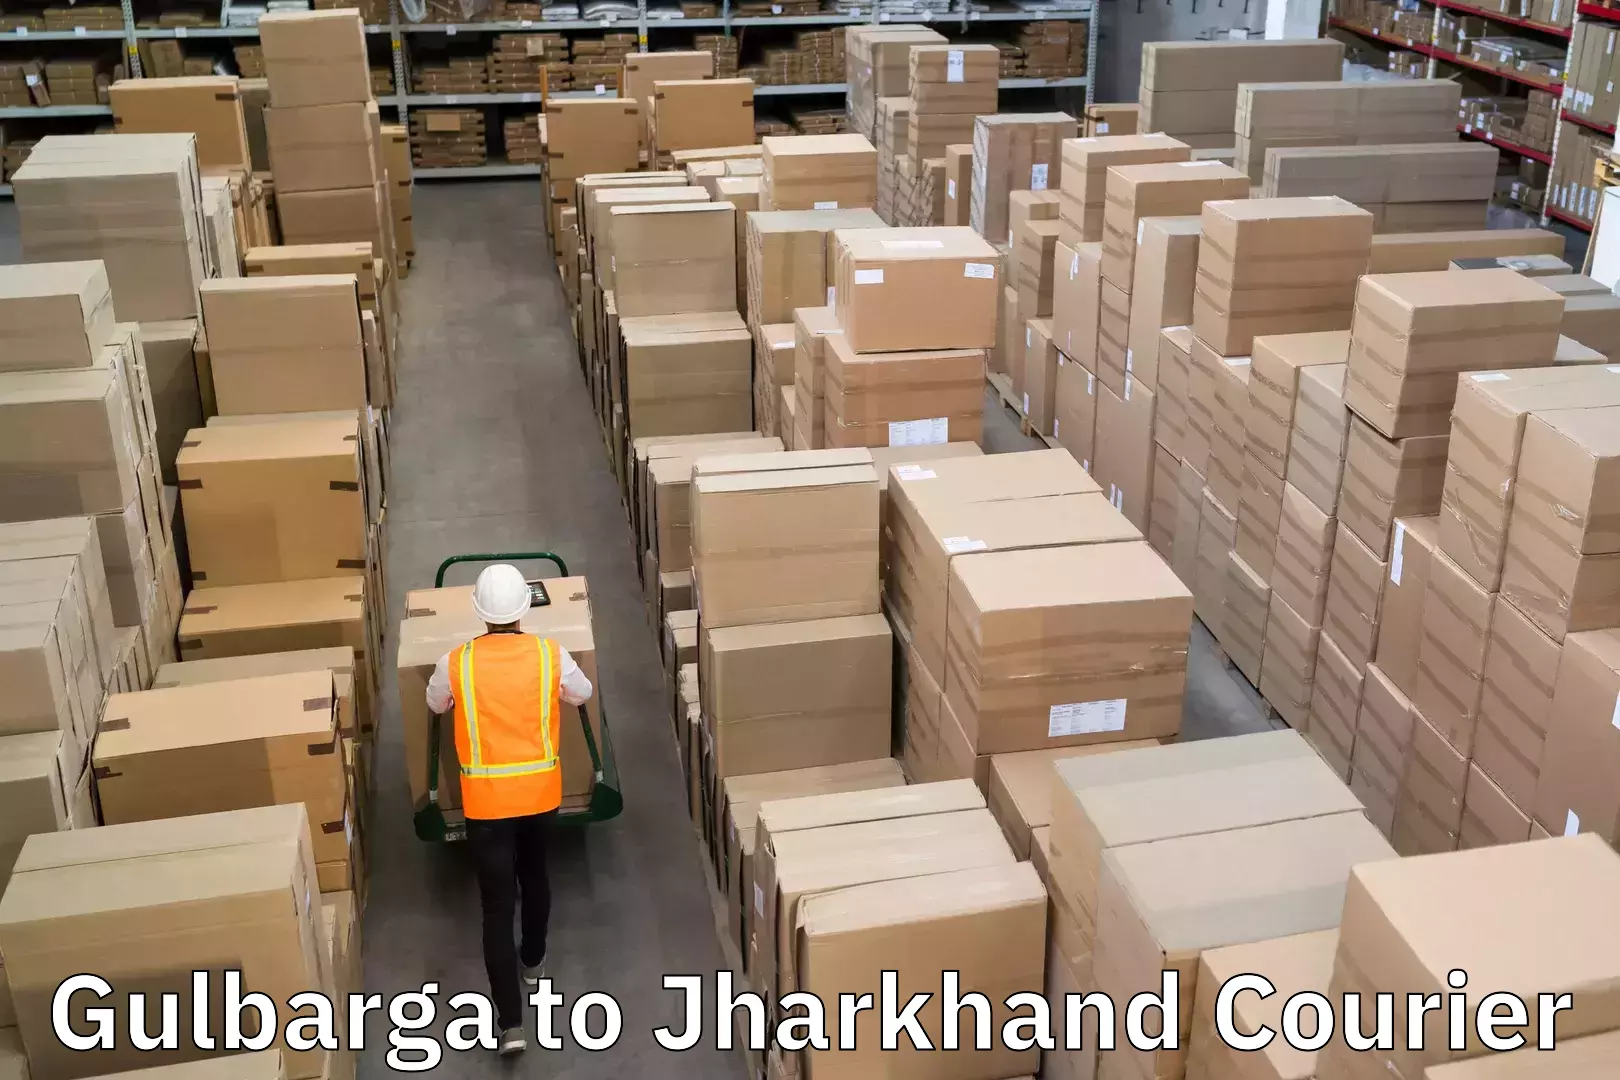 Digital courier platforms Gulbarga to Jharkhand